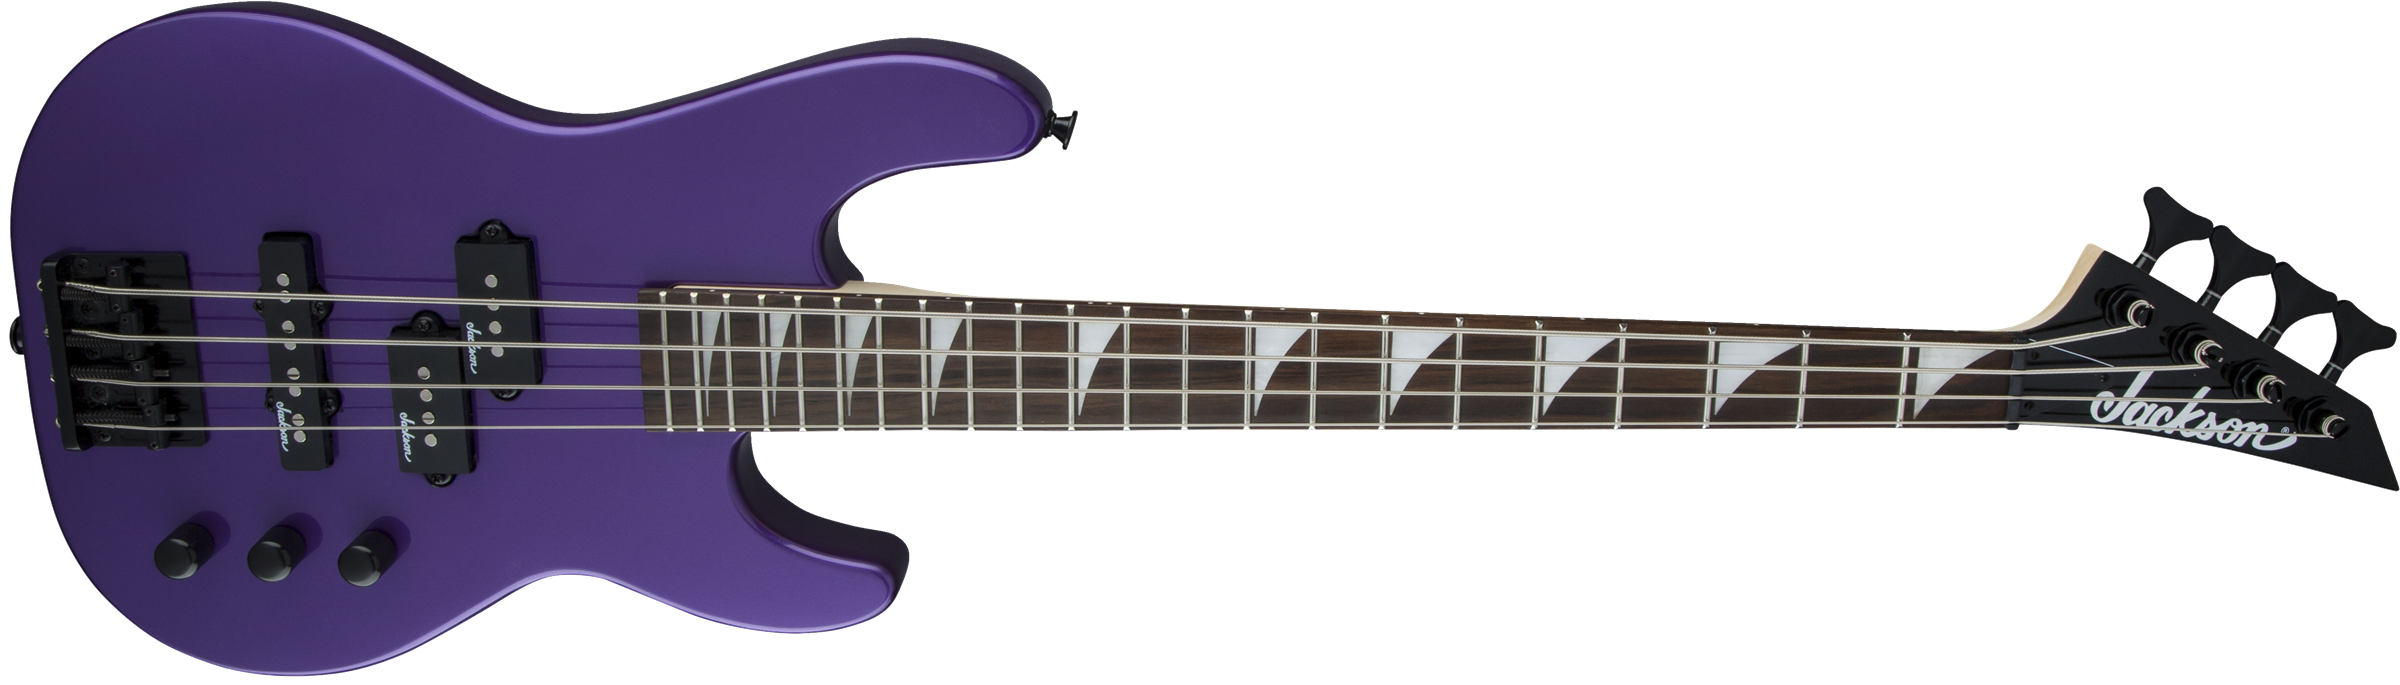 Jackson Js Series Concert Bass Minion Js1x - Pavo Purple - Electric bass for kids - Variation 2